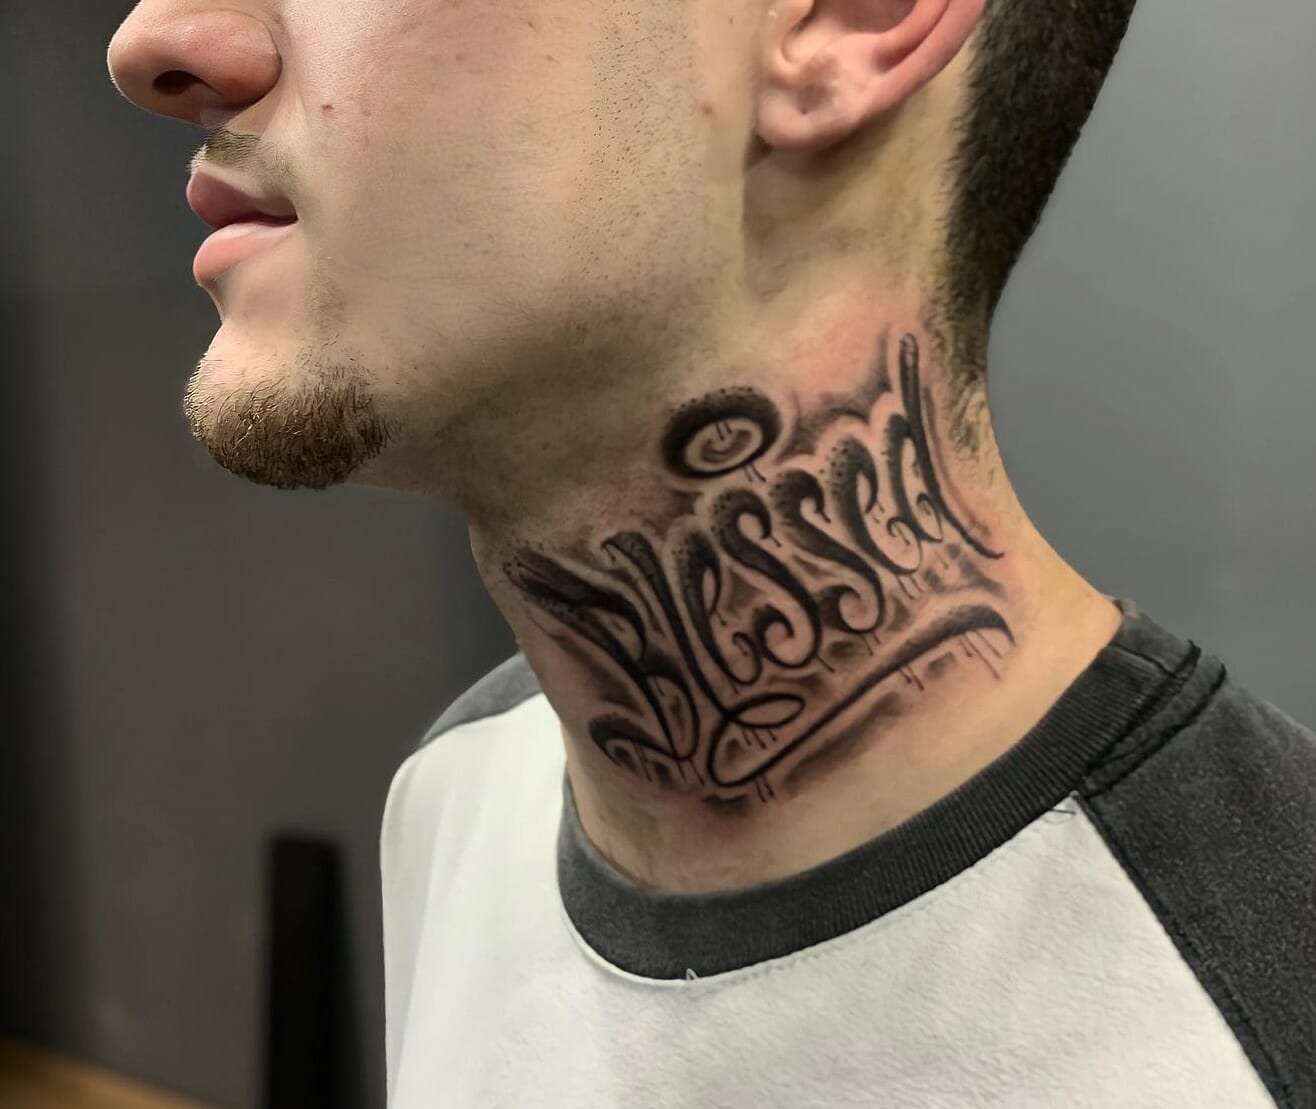 Bible neck tattoos